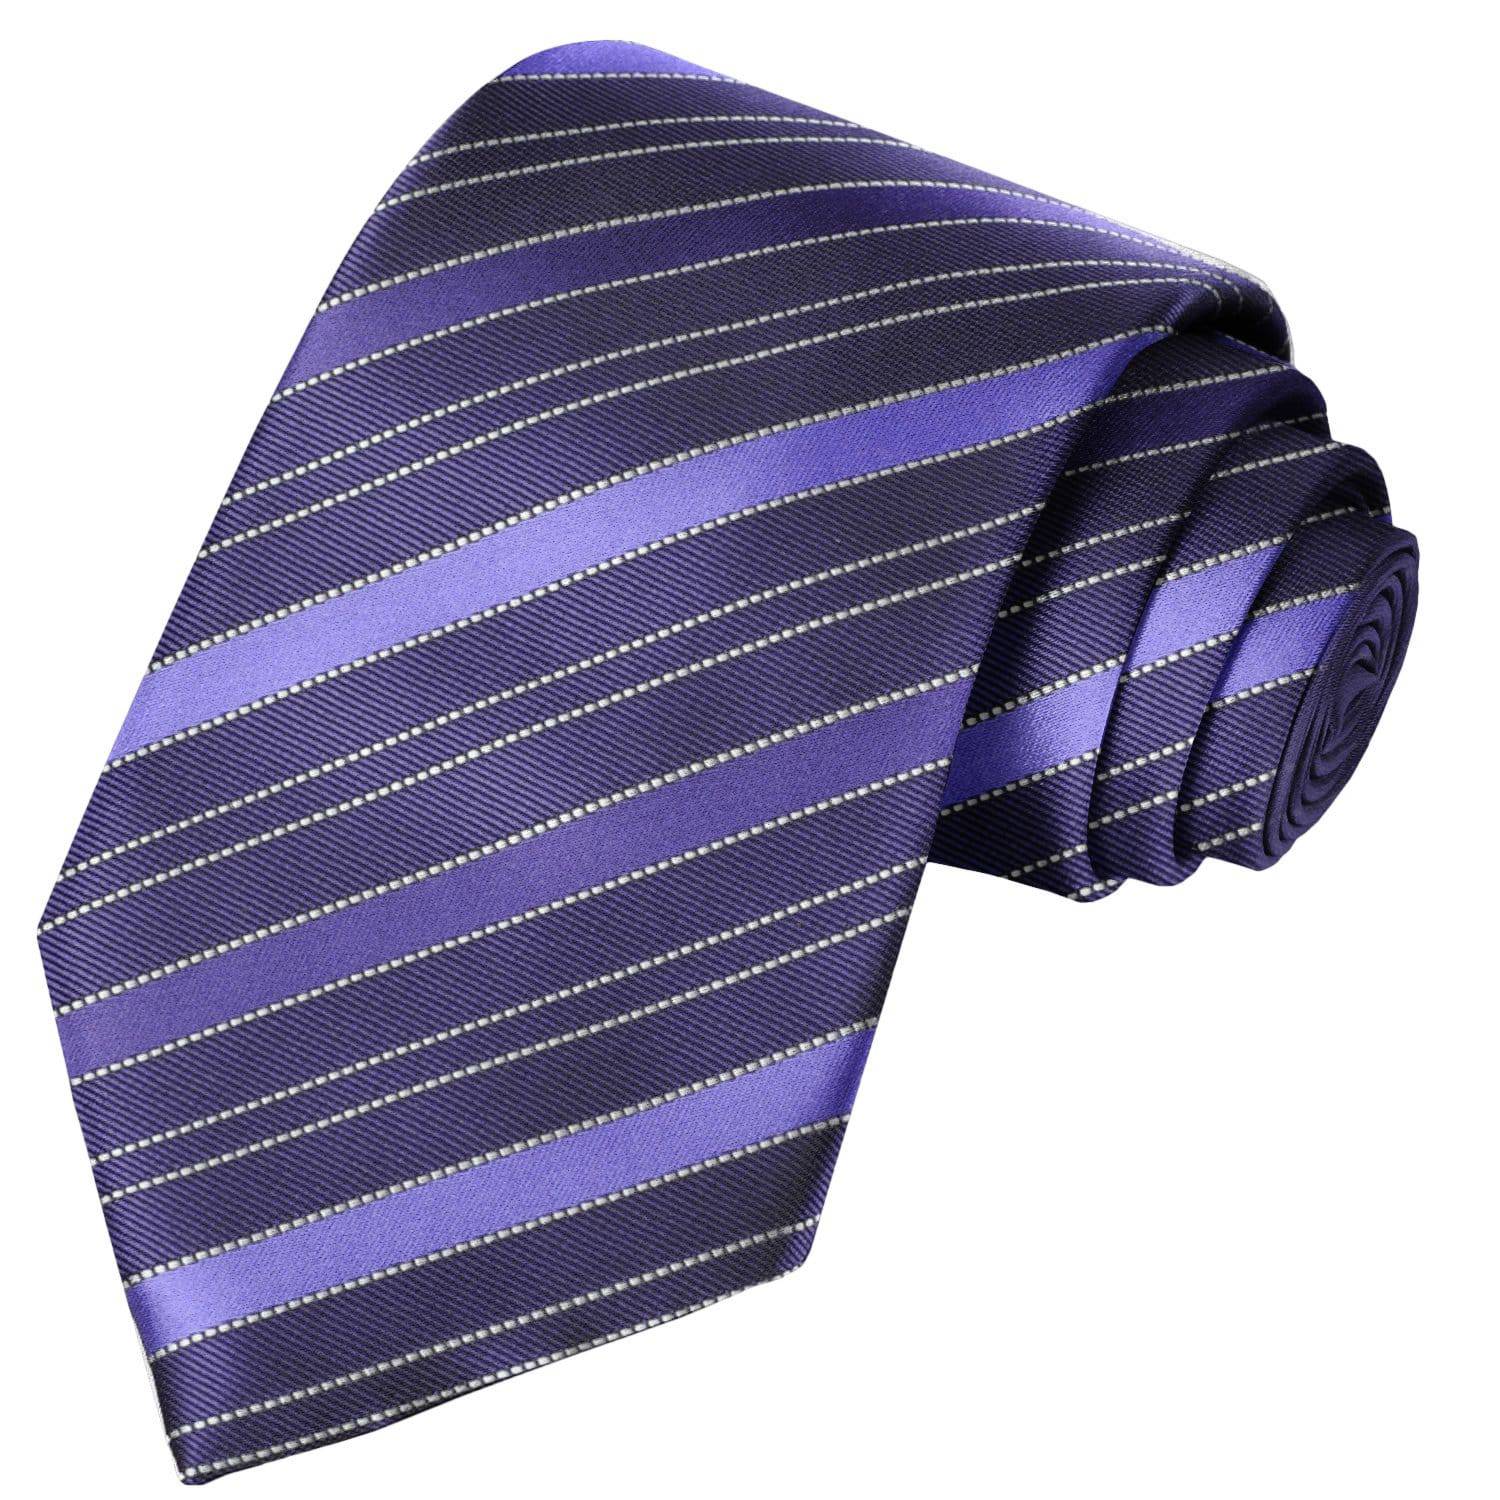 Eggplant-Amethyst-Sewed White Striped Tie - Tie, bowtie, pocket square  | Kissties